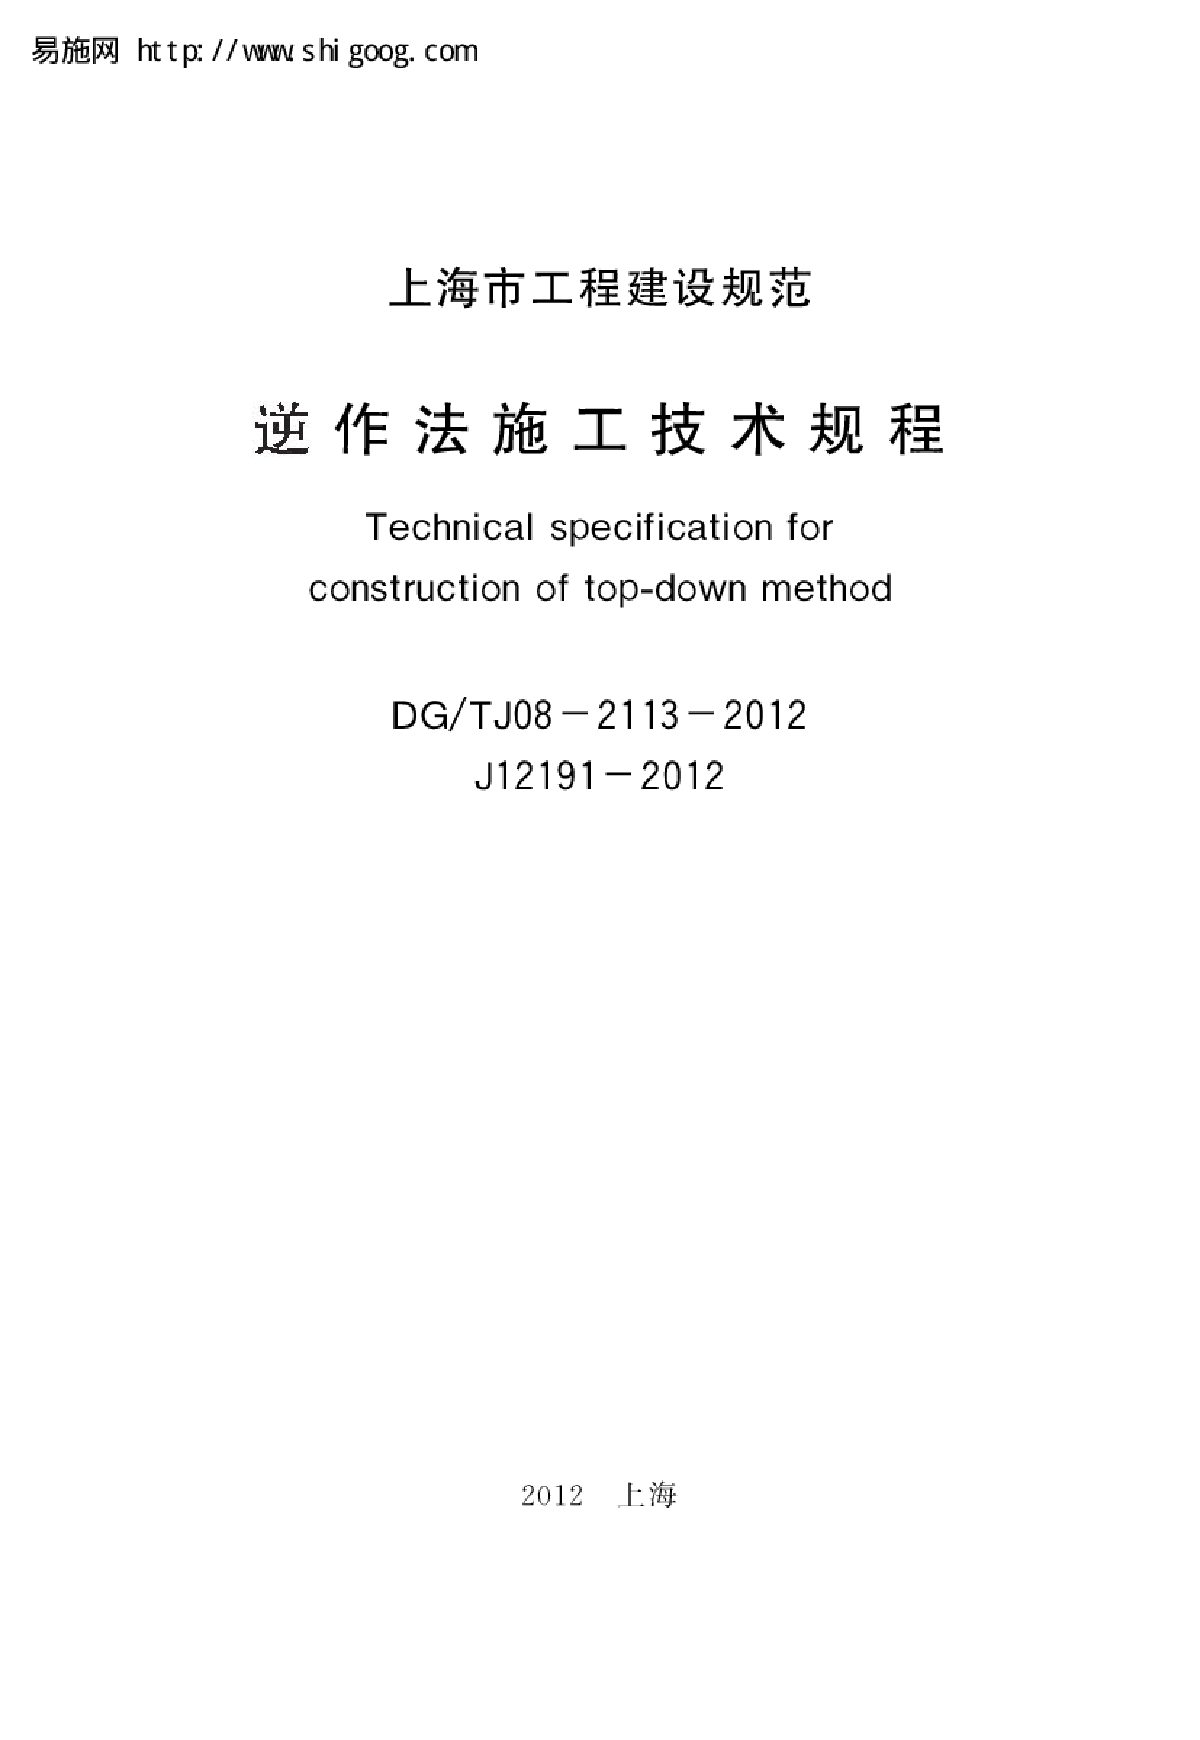 DGTJ 08-2113-2012 逆作法施工技术规程-图一